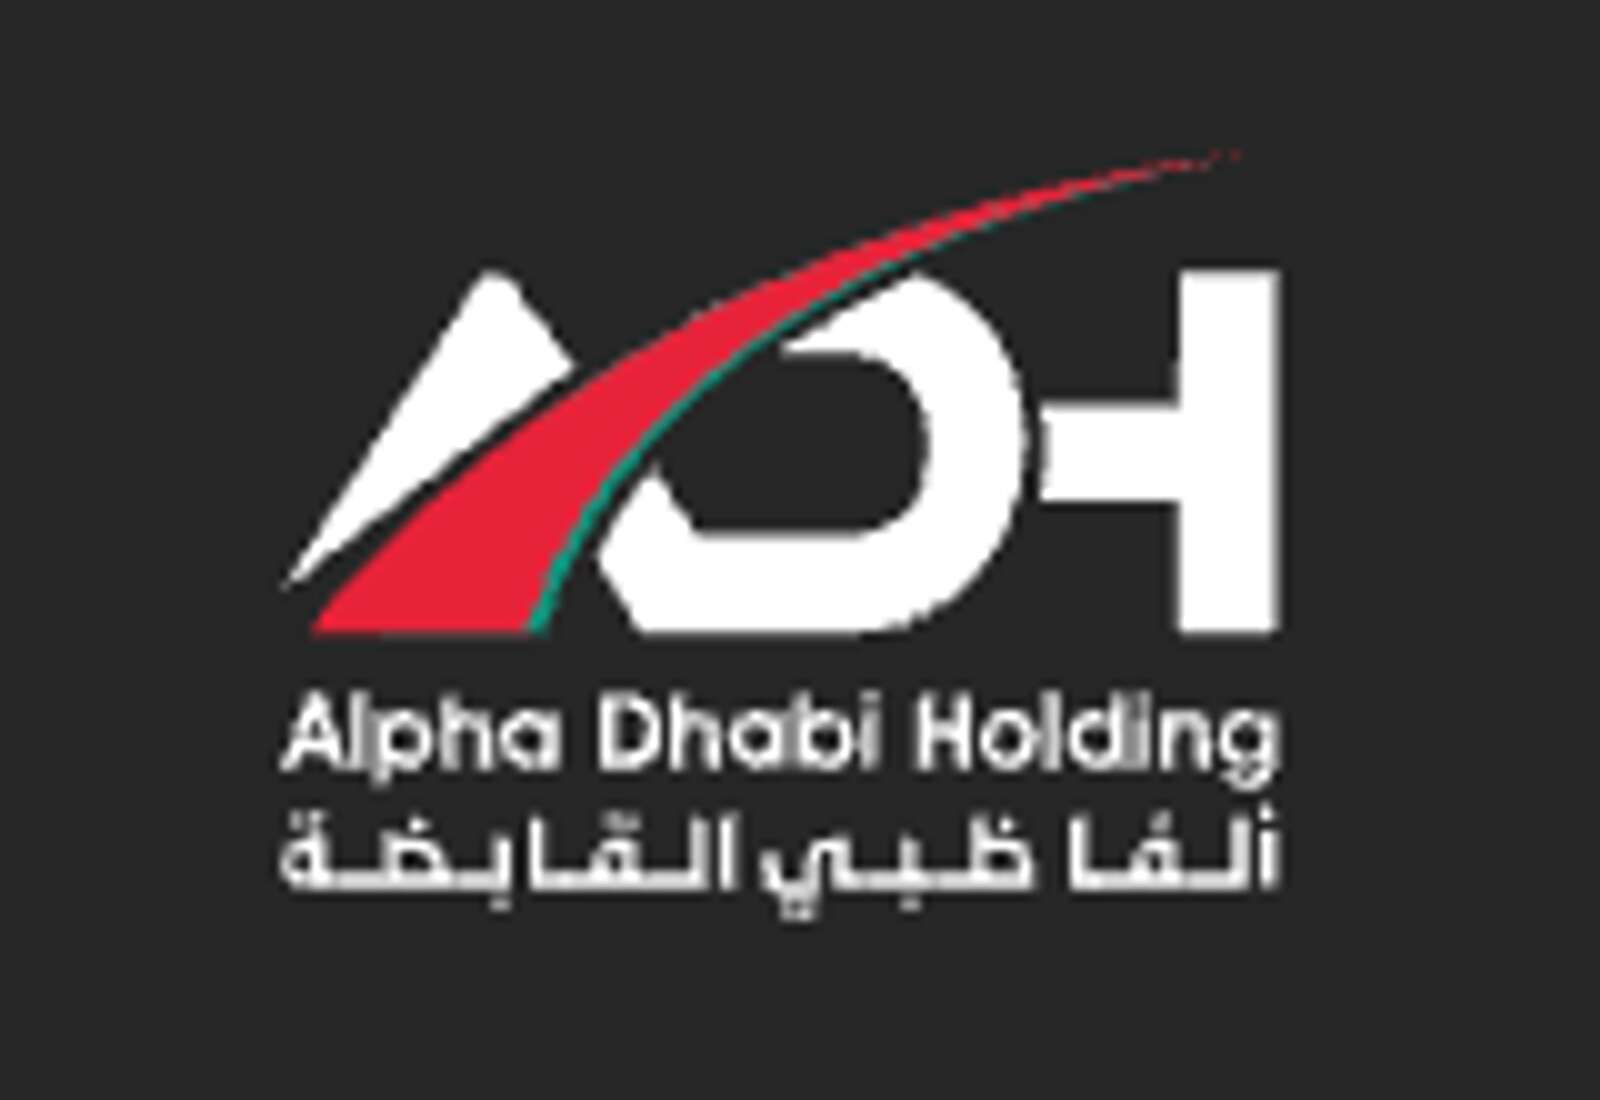 alpha dhabi records dh4.6b q1 net profit